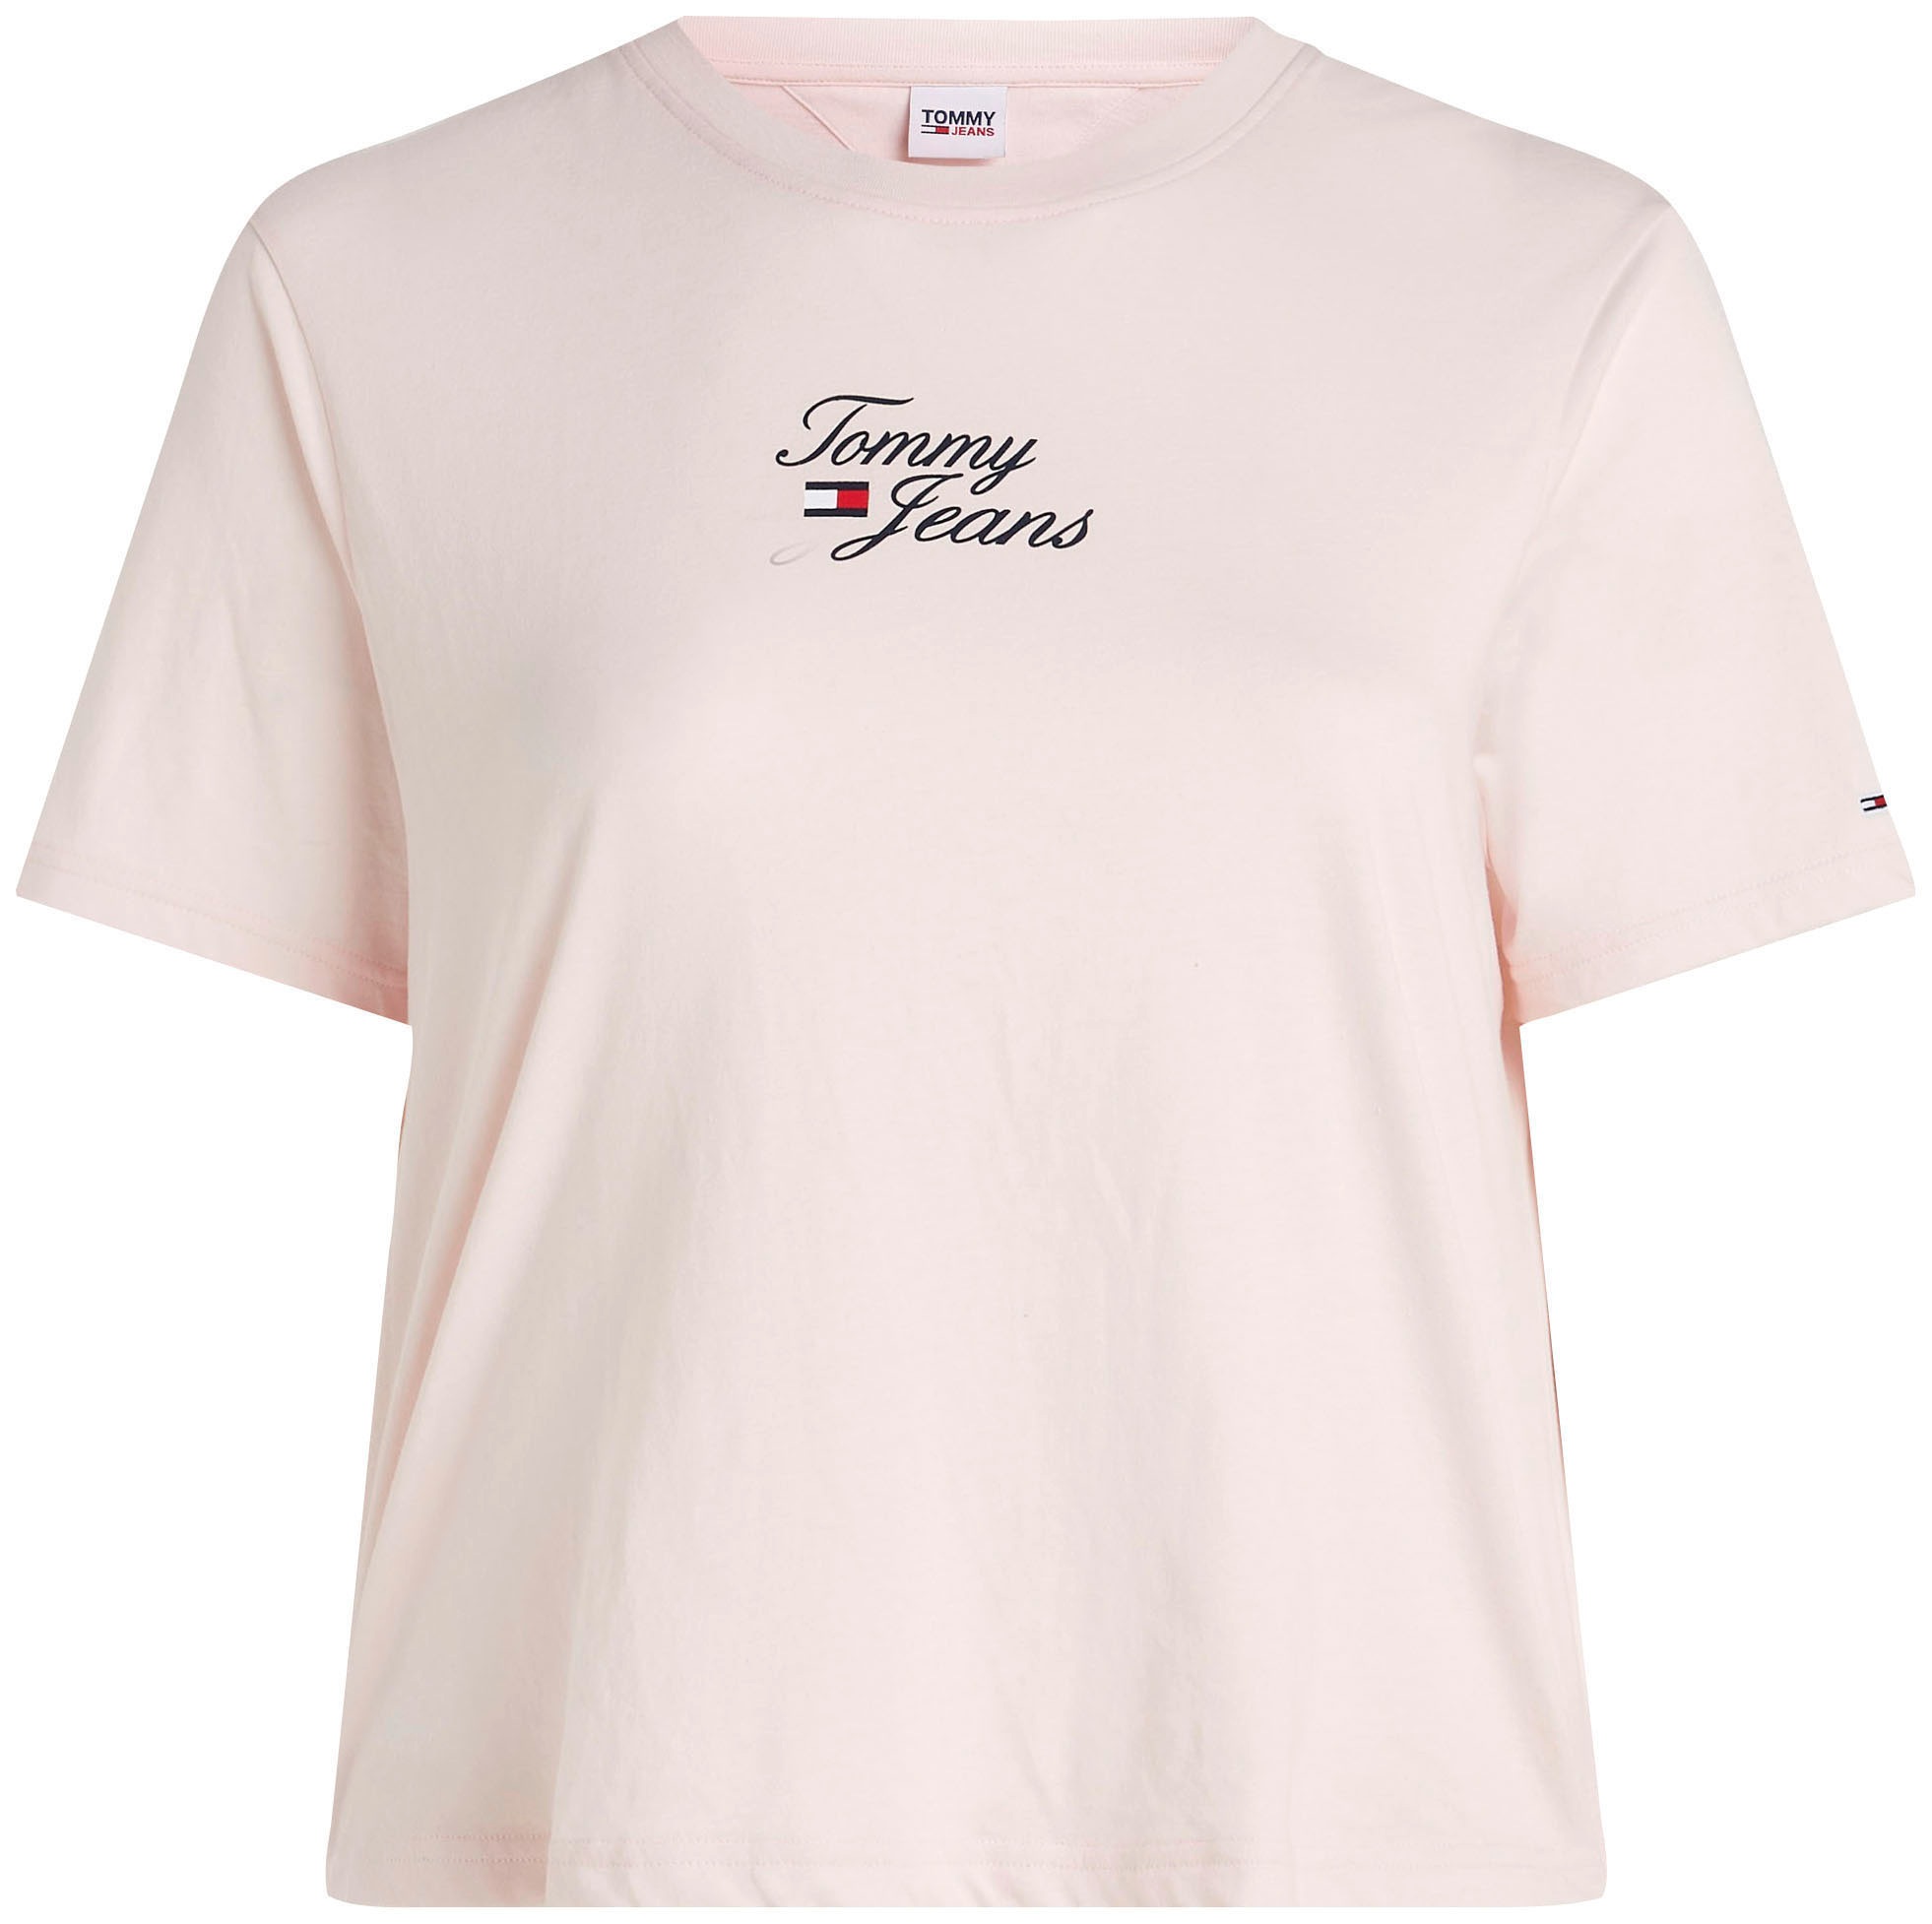 REG CRV ESSENTIAL Tommy online kaufen SS«, Jeans BAUR Schriftzug | 1 T-Shirt Tommy CURVE,mit SIZE LOGO Jeans »TJW Curve PLUS